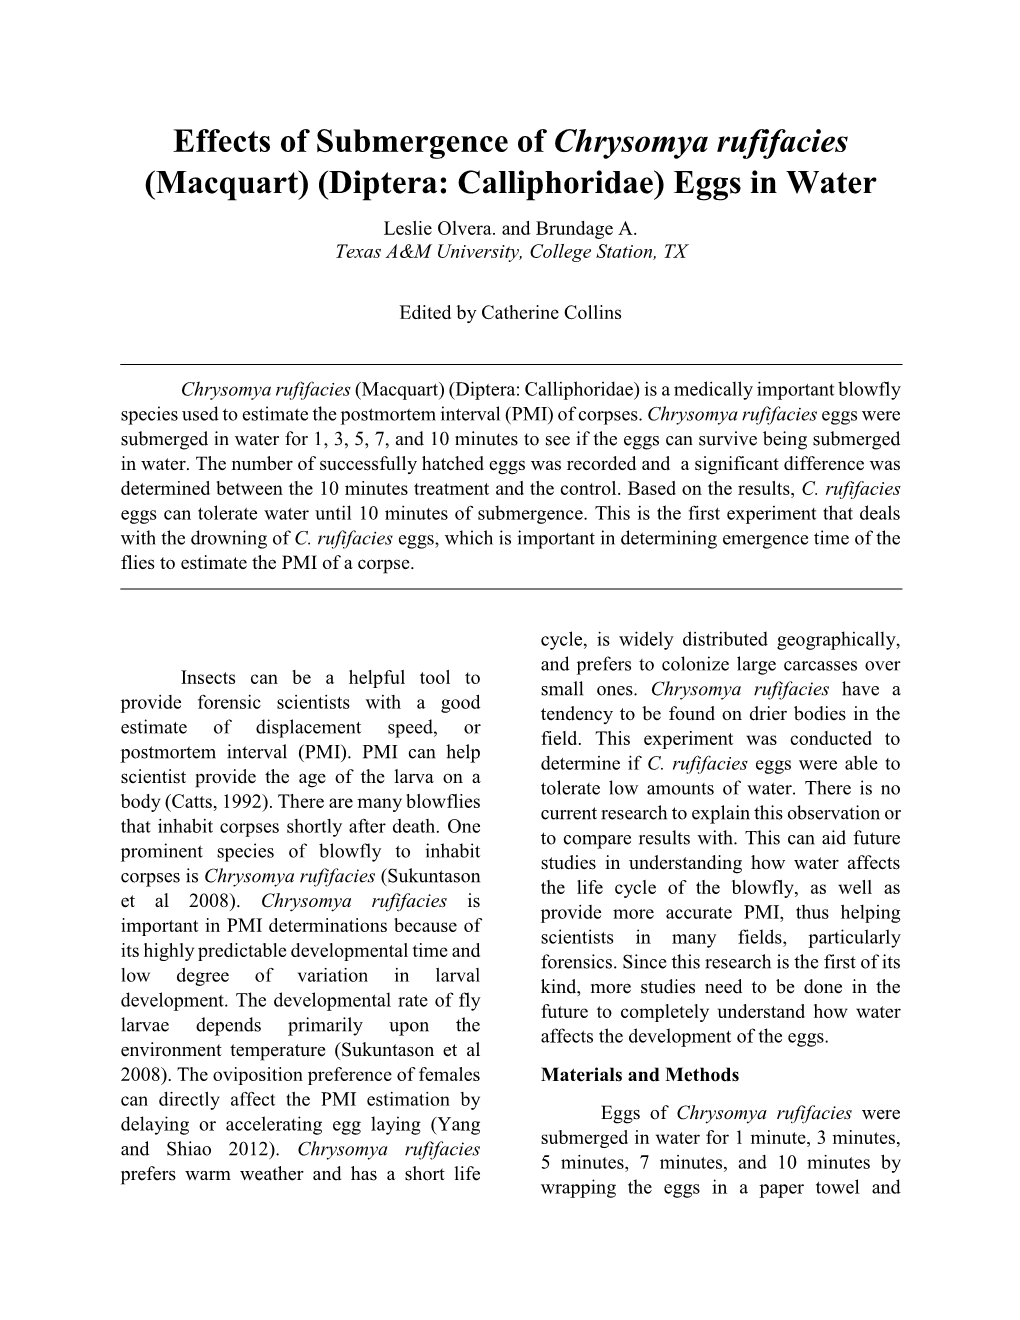 Effects of Submergence of Chrysomya Rufifacies (Macquart) (Diptera: Calliphoridae) Eggs in Water Leslie Olvera